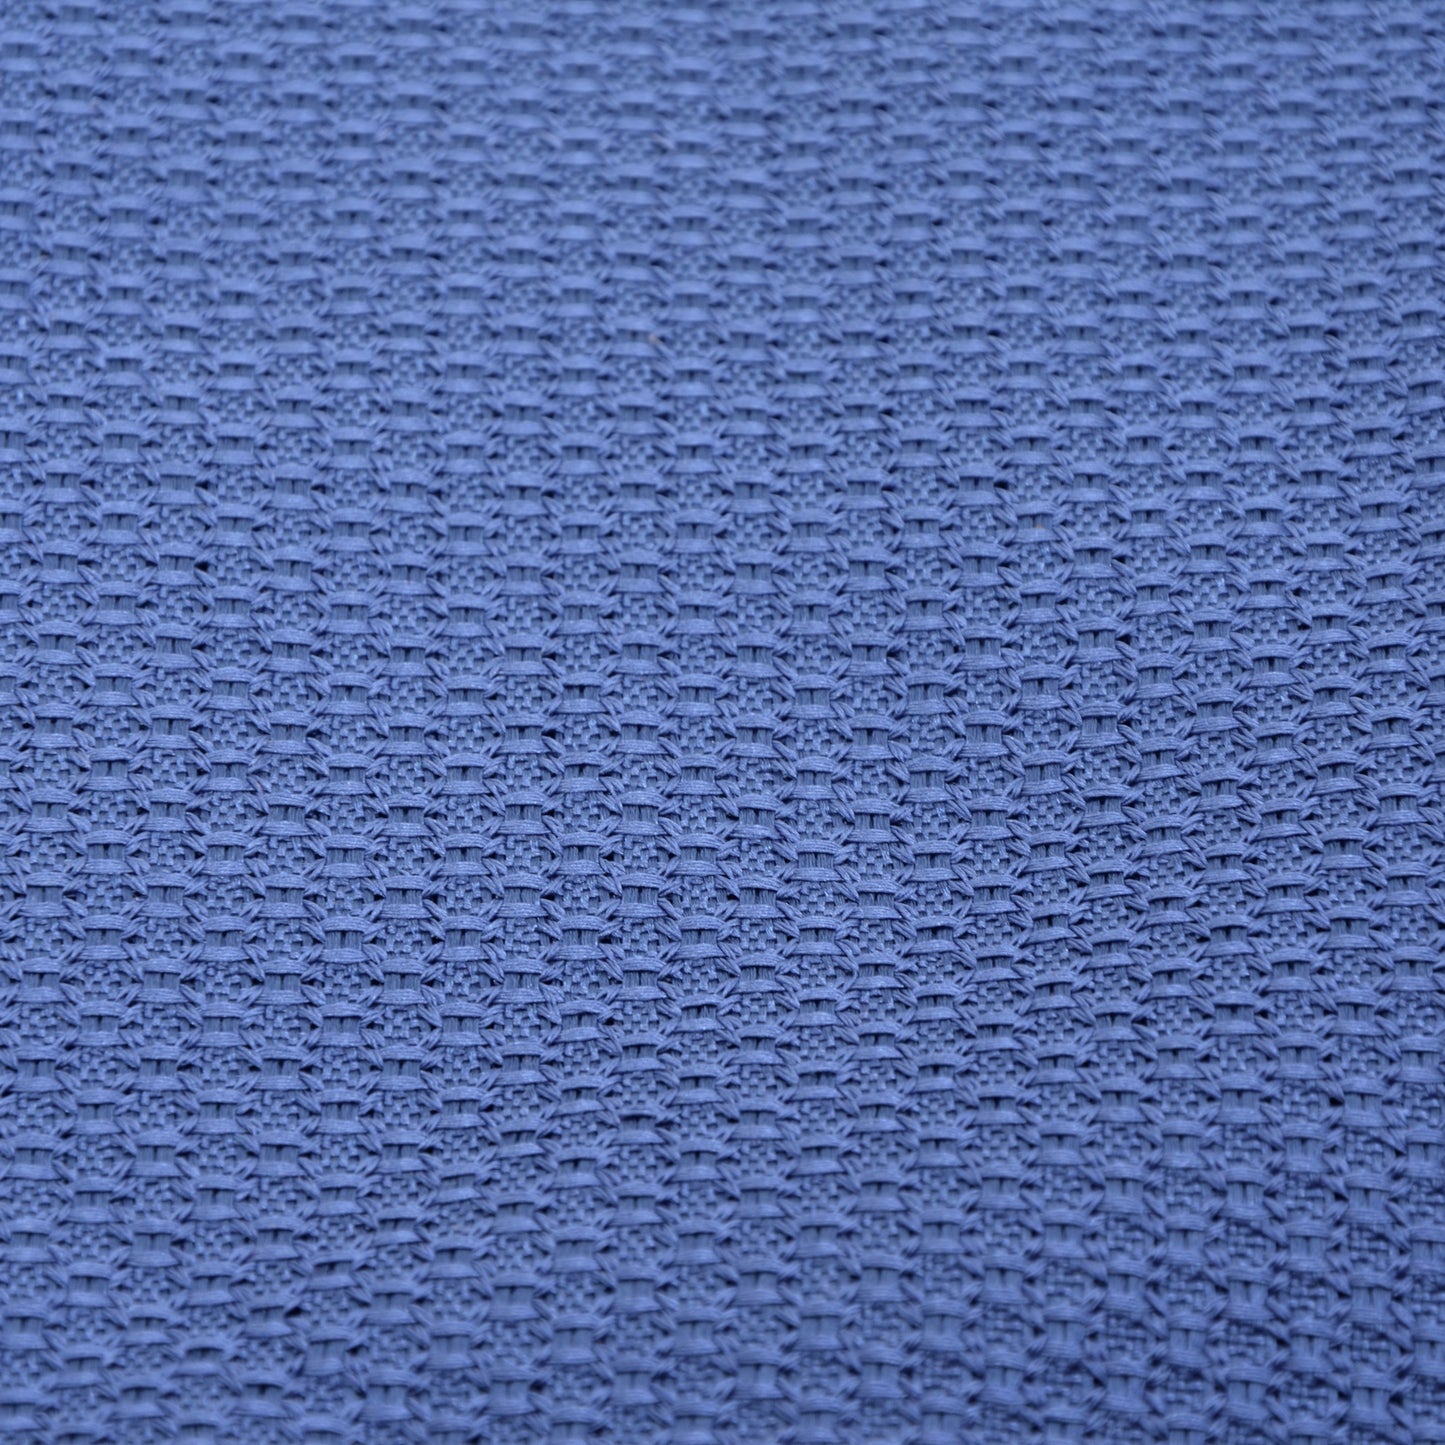 Harvey & Hudson Grenadine Silk Pocket Square - Blue